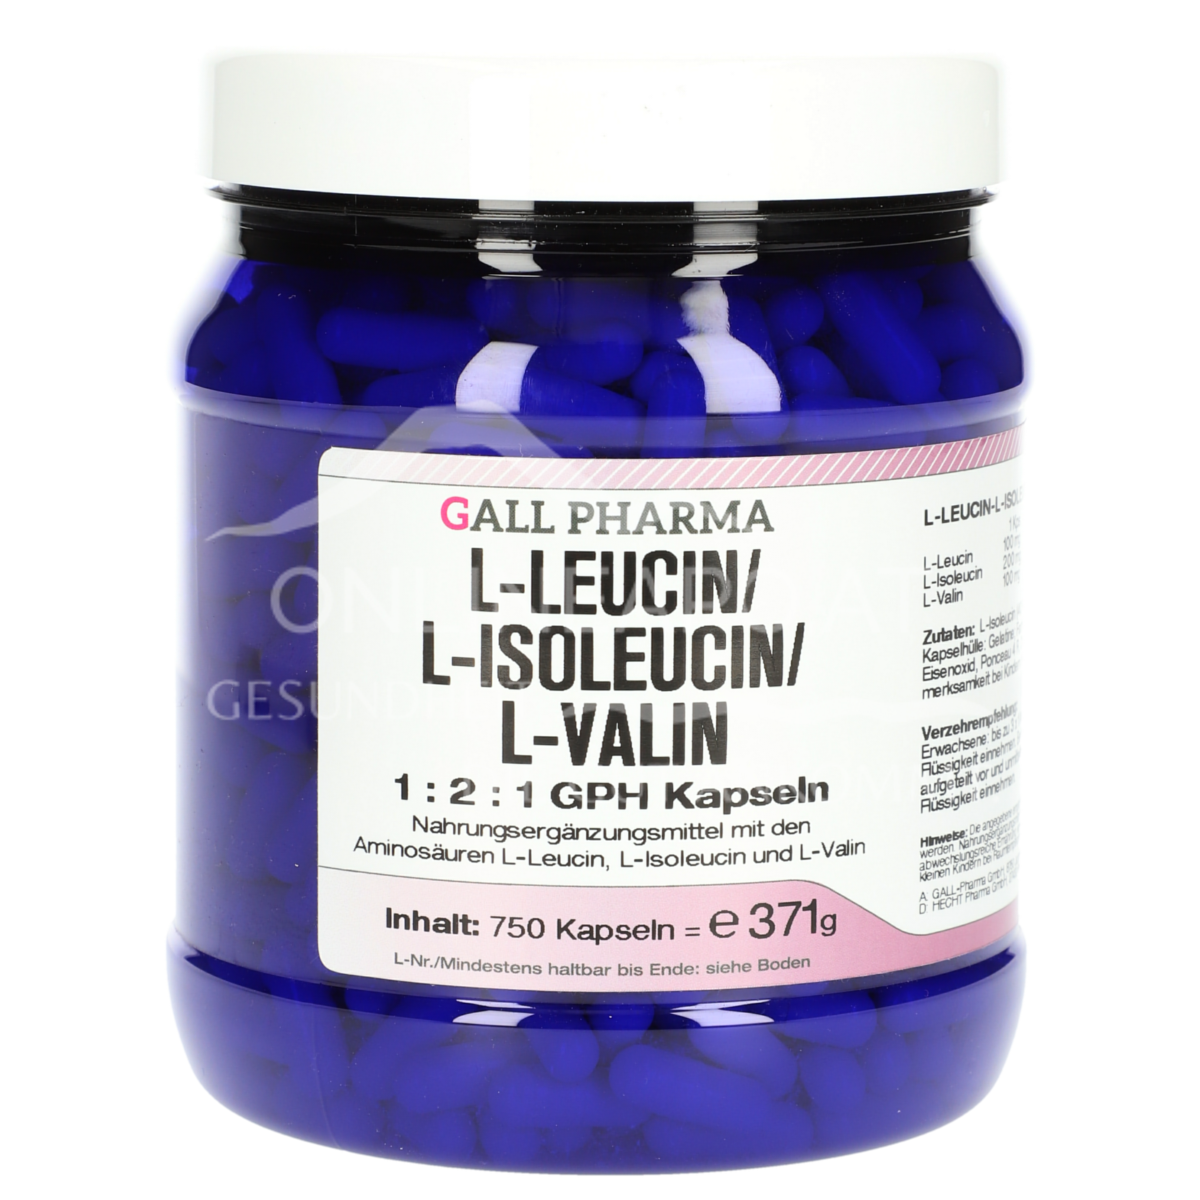 Gall Pharma L-Leucin/L-Isoleucin/L-Valin 1:2:1 Kapseln